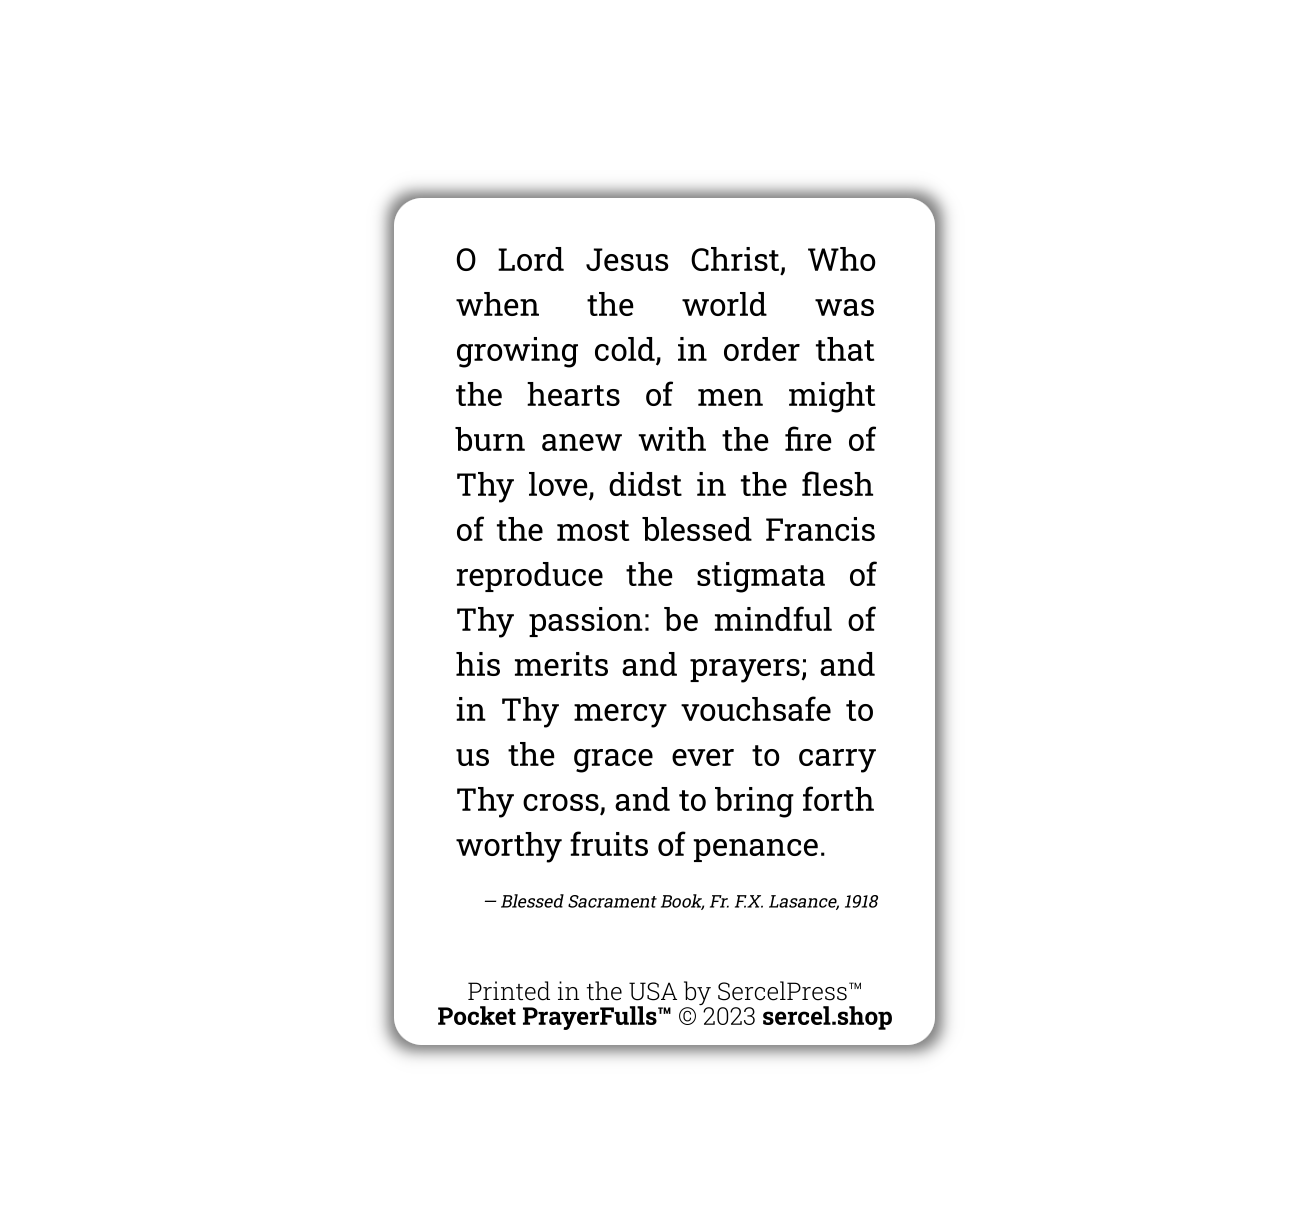 Sacred Stigmata of St. Francis of Assisi: Pocket PrayerFulls™ | Durable Wallet Holy Cards | Catholic Prayers